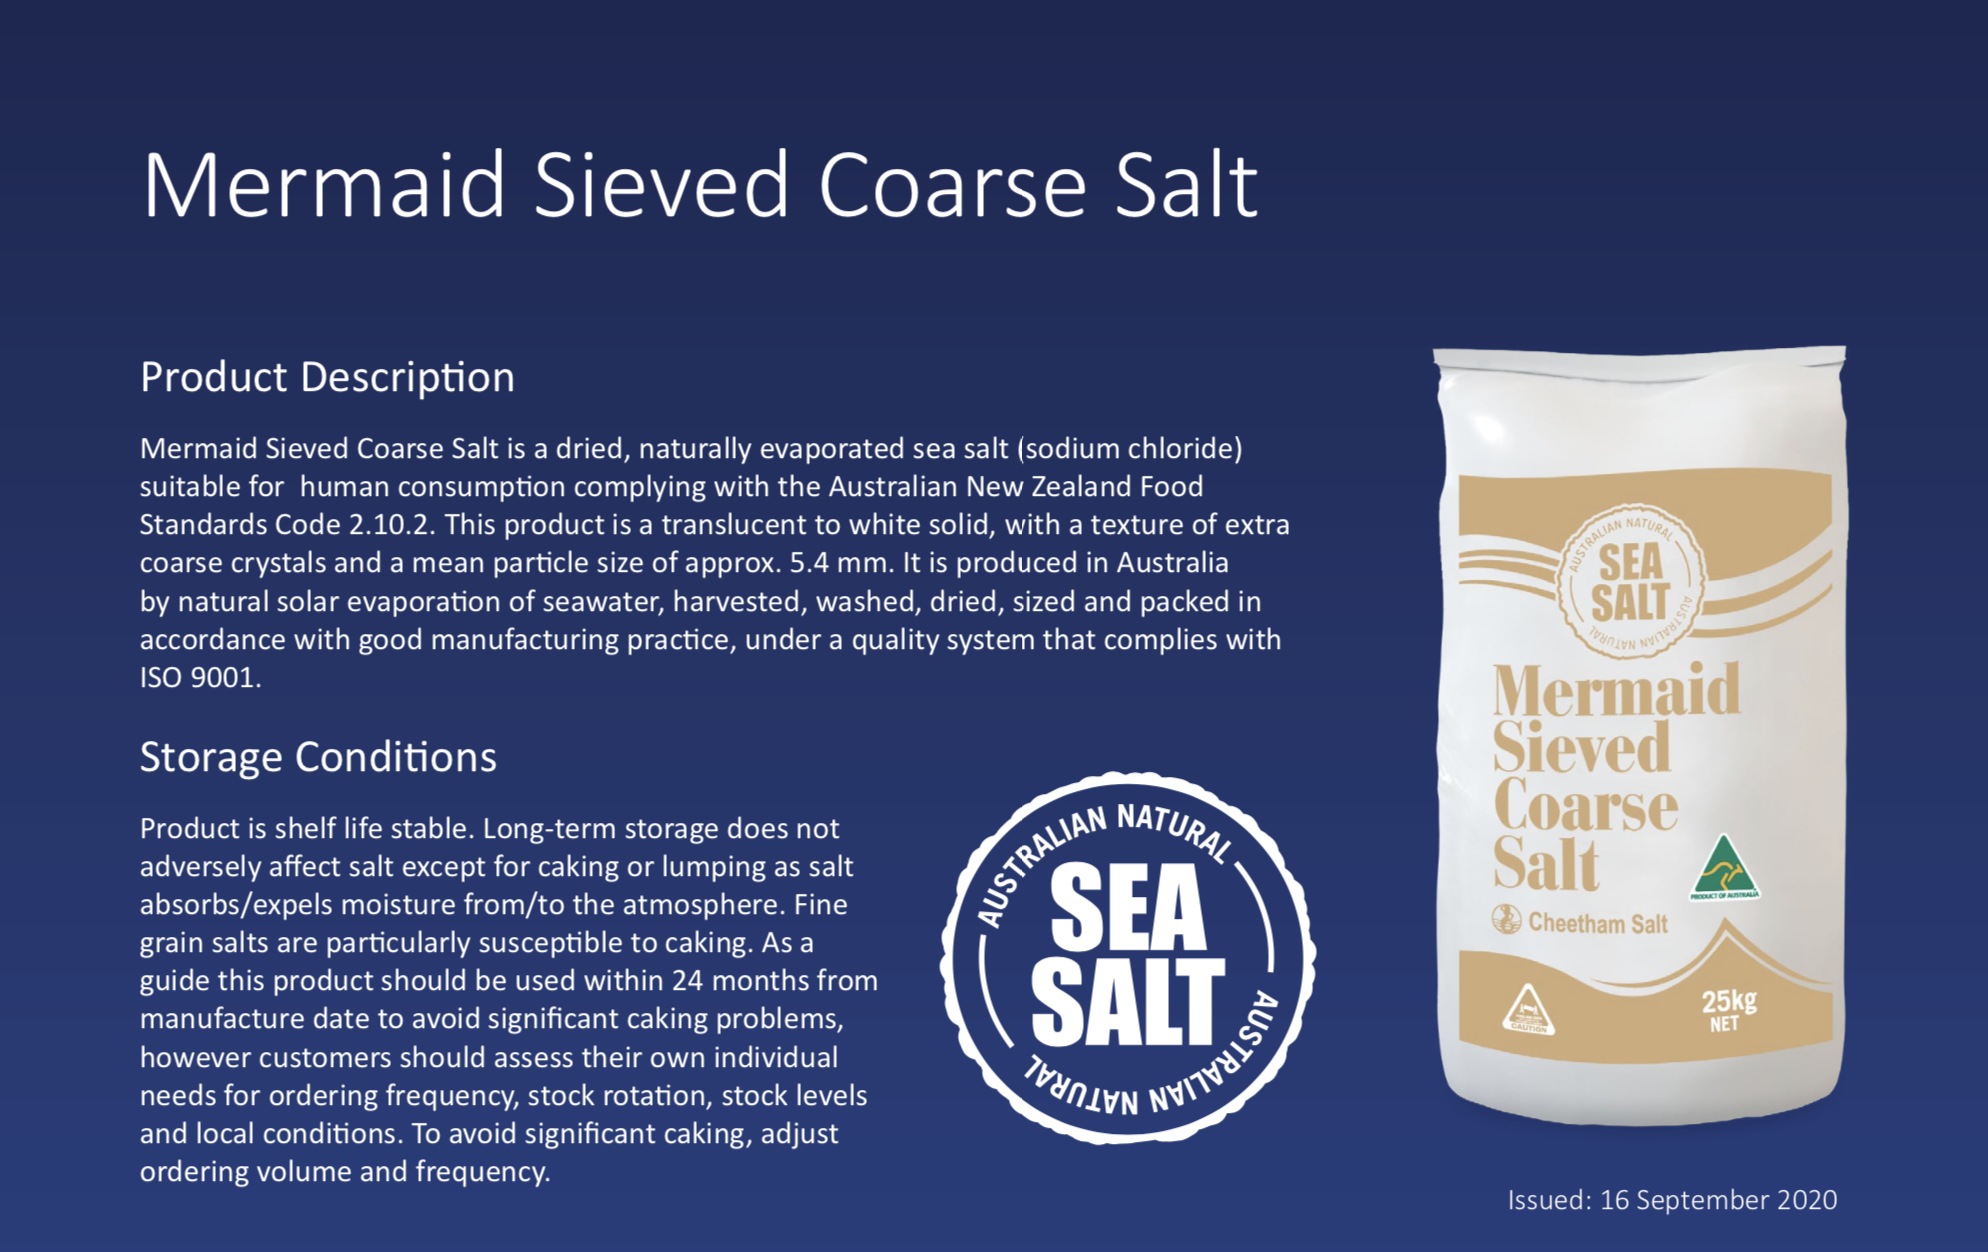 Product description for Mermaid Sieved Coarse Salt. The product description includes storage information and details of the food grade salt.